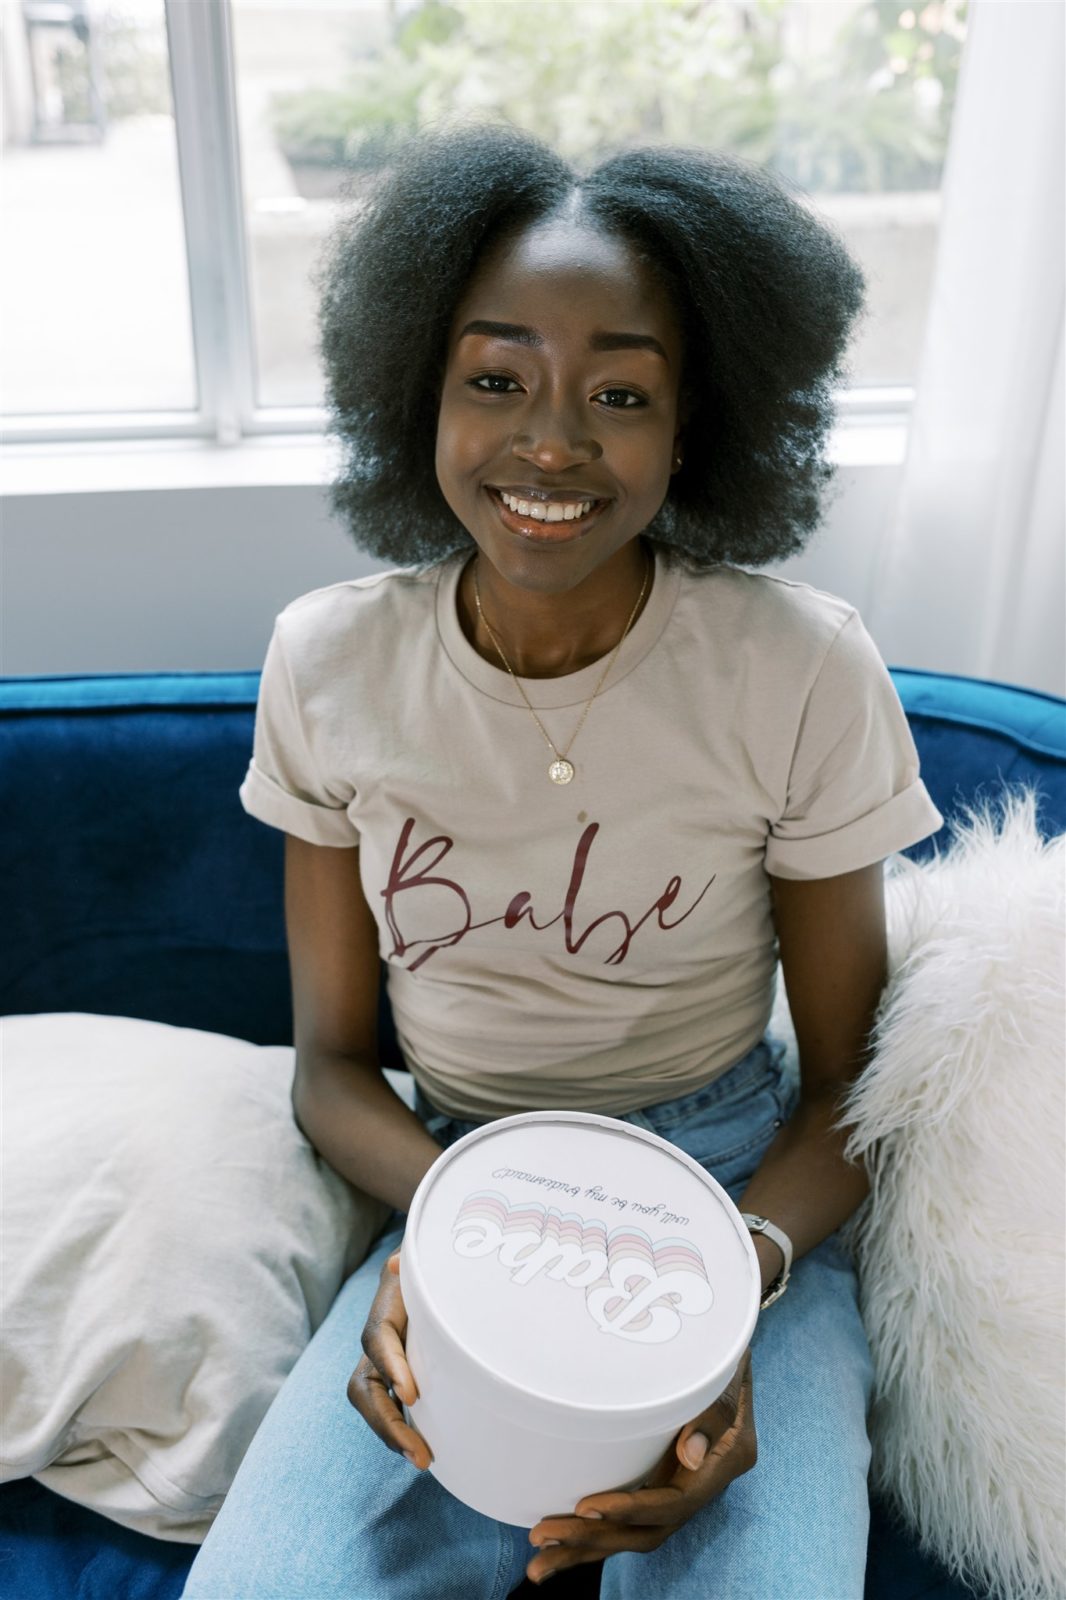 "Babe" tshirt for a bridesmaid proposal gift idea